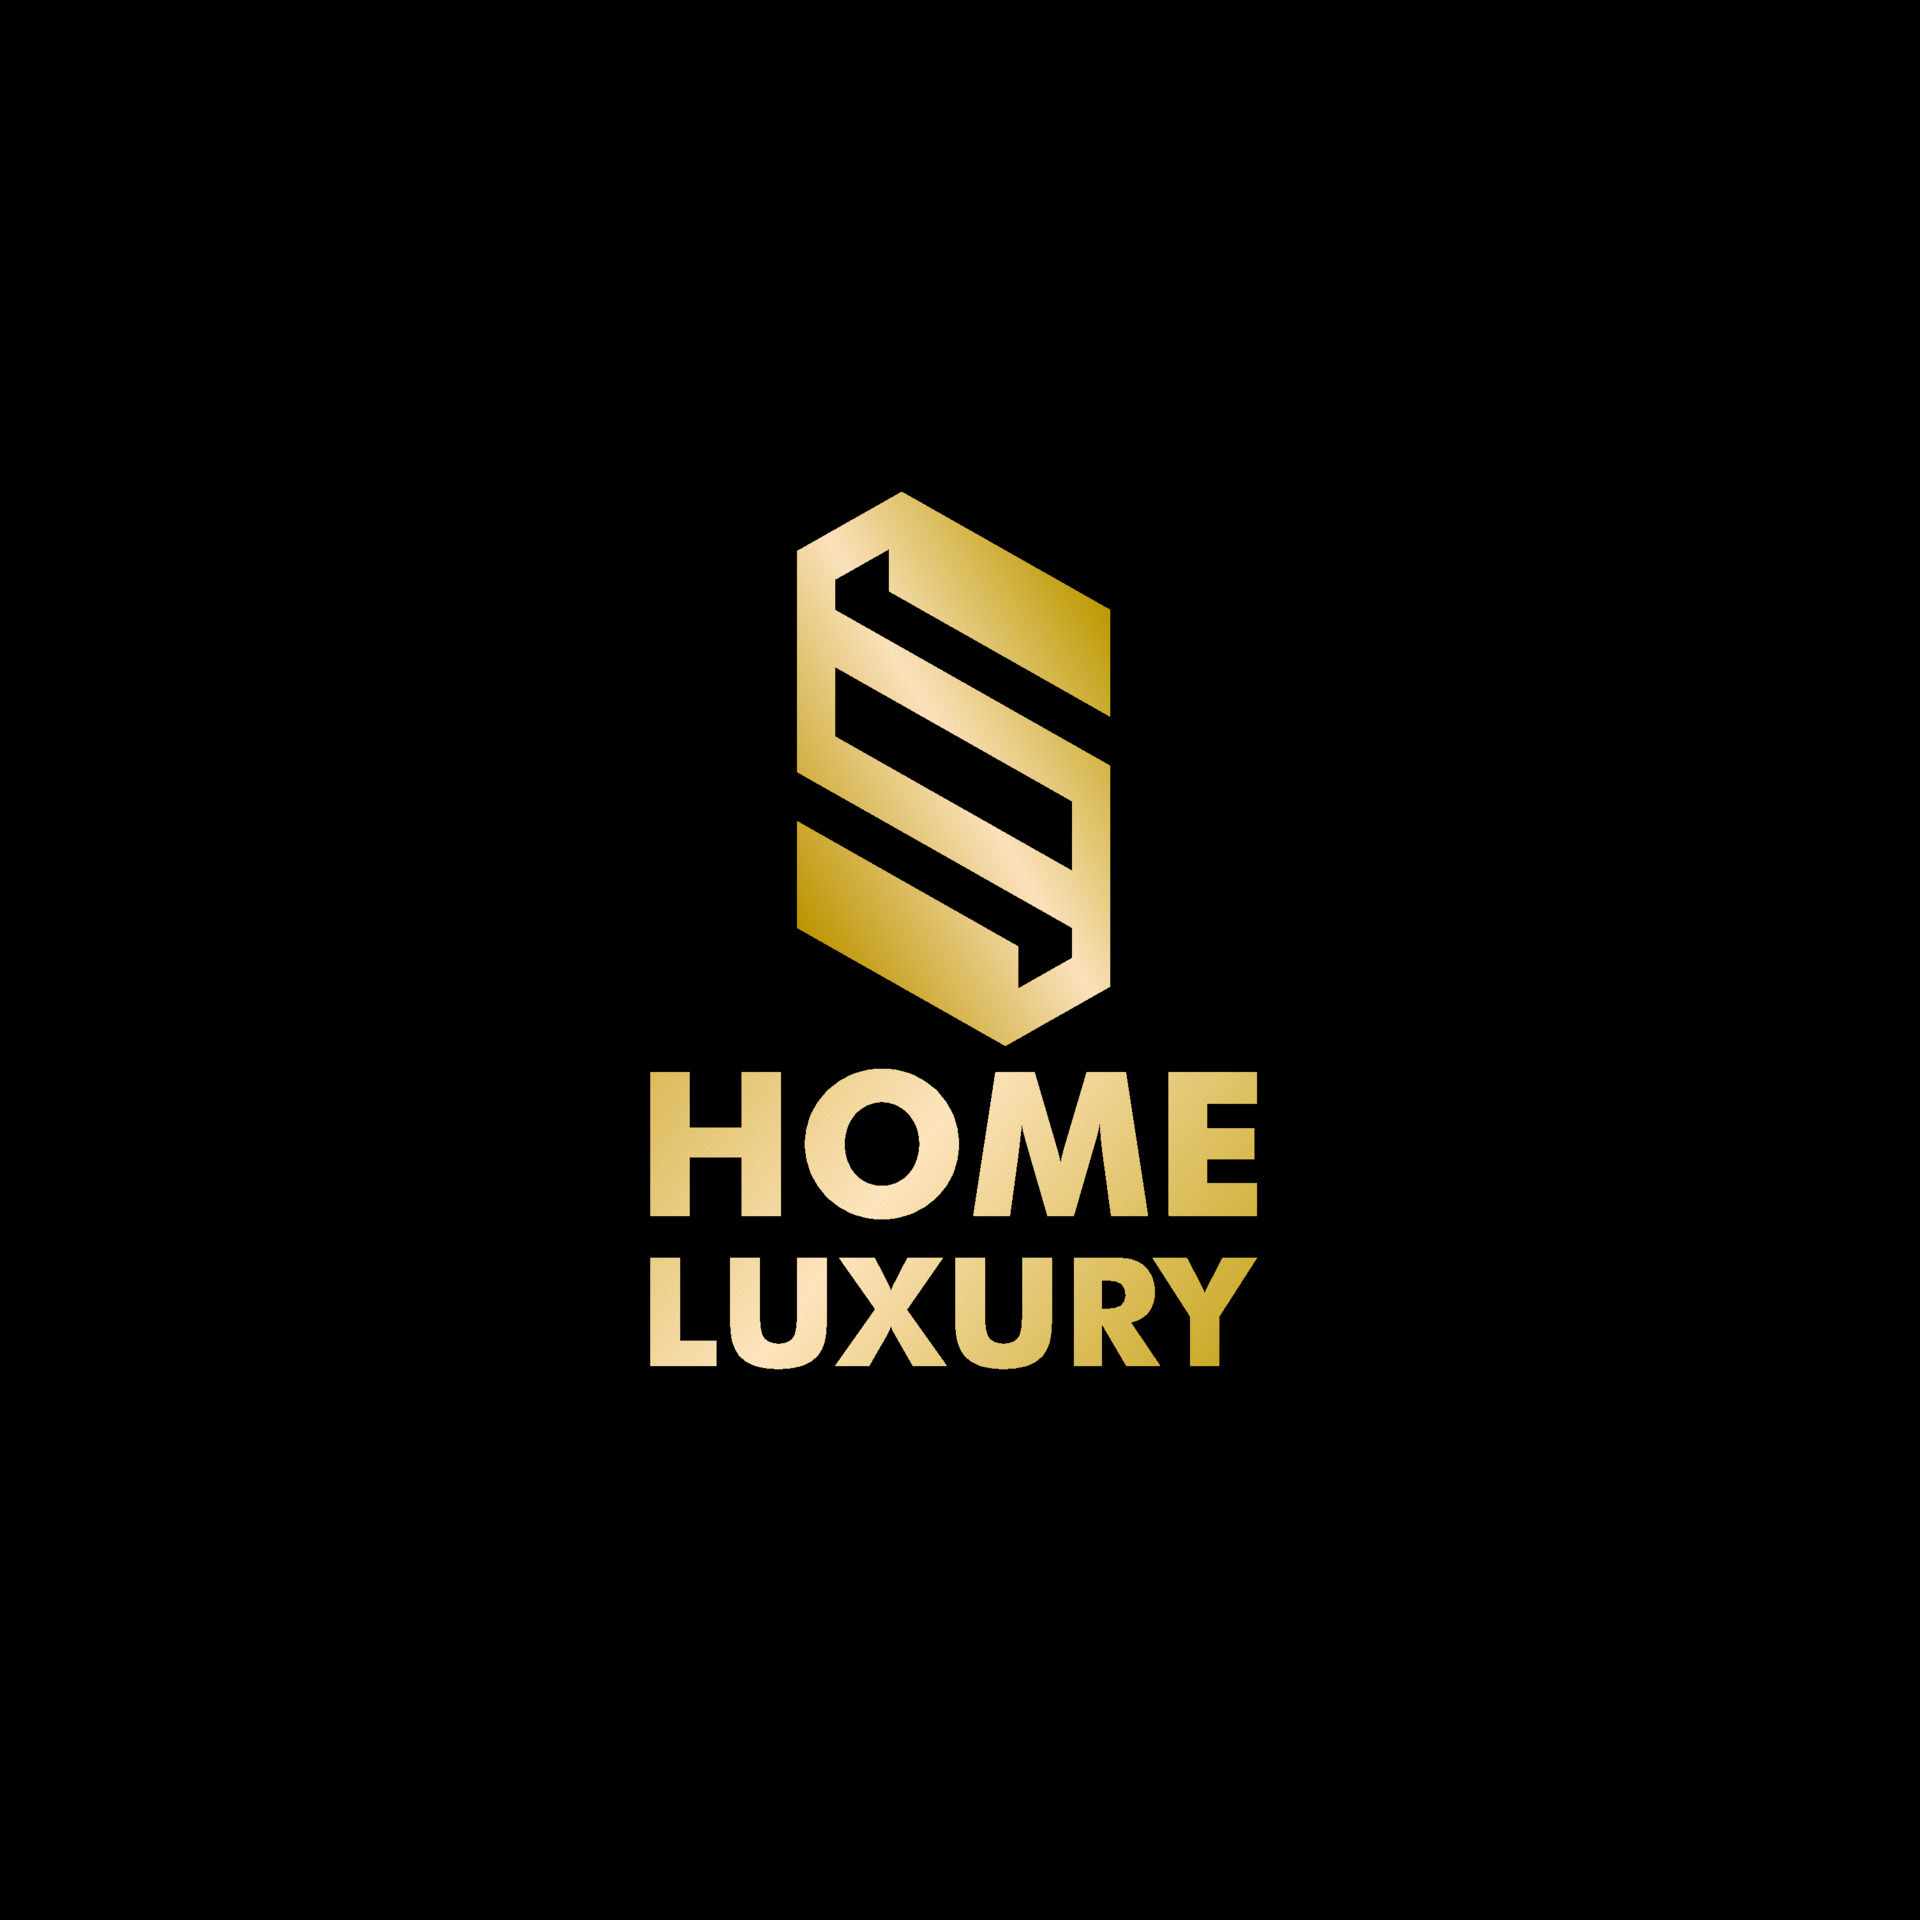 hohome luxury logo with gold icon, vectorme luxury 7264245 Vector Art ...